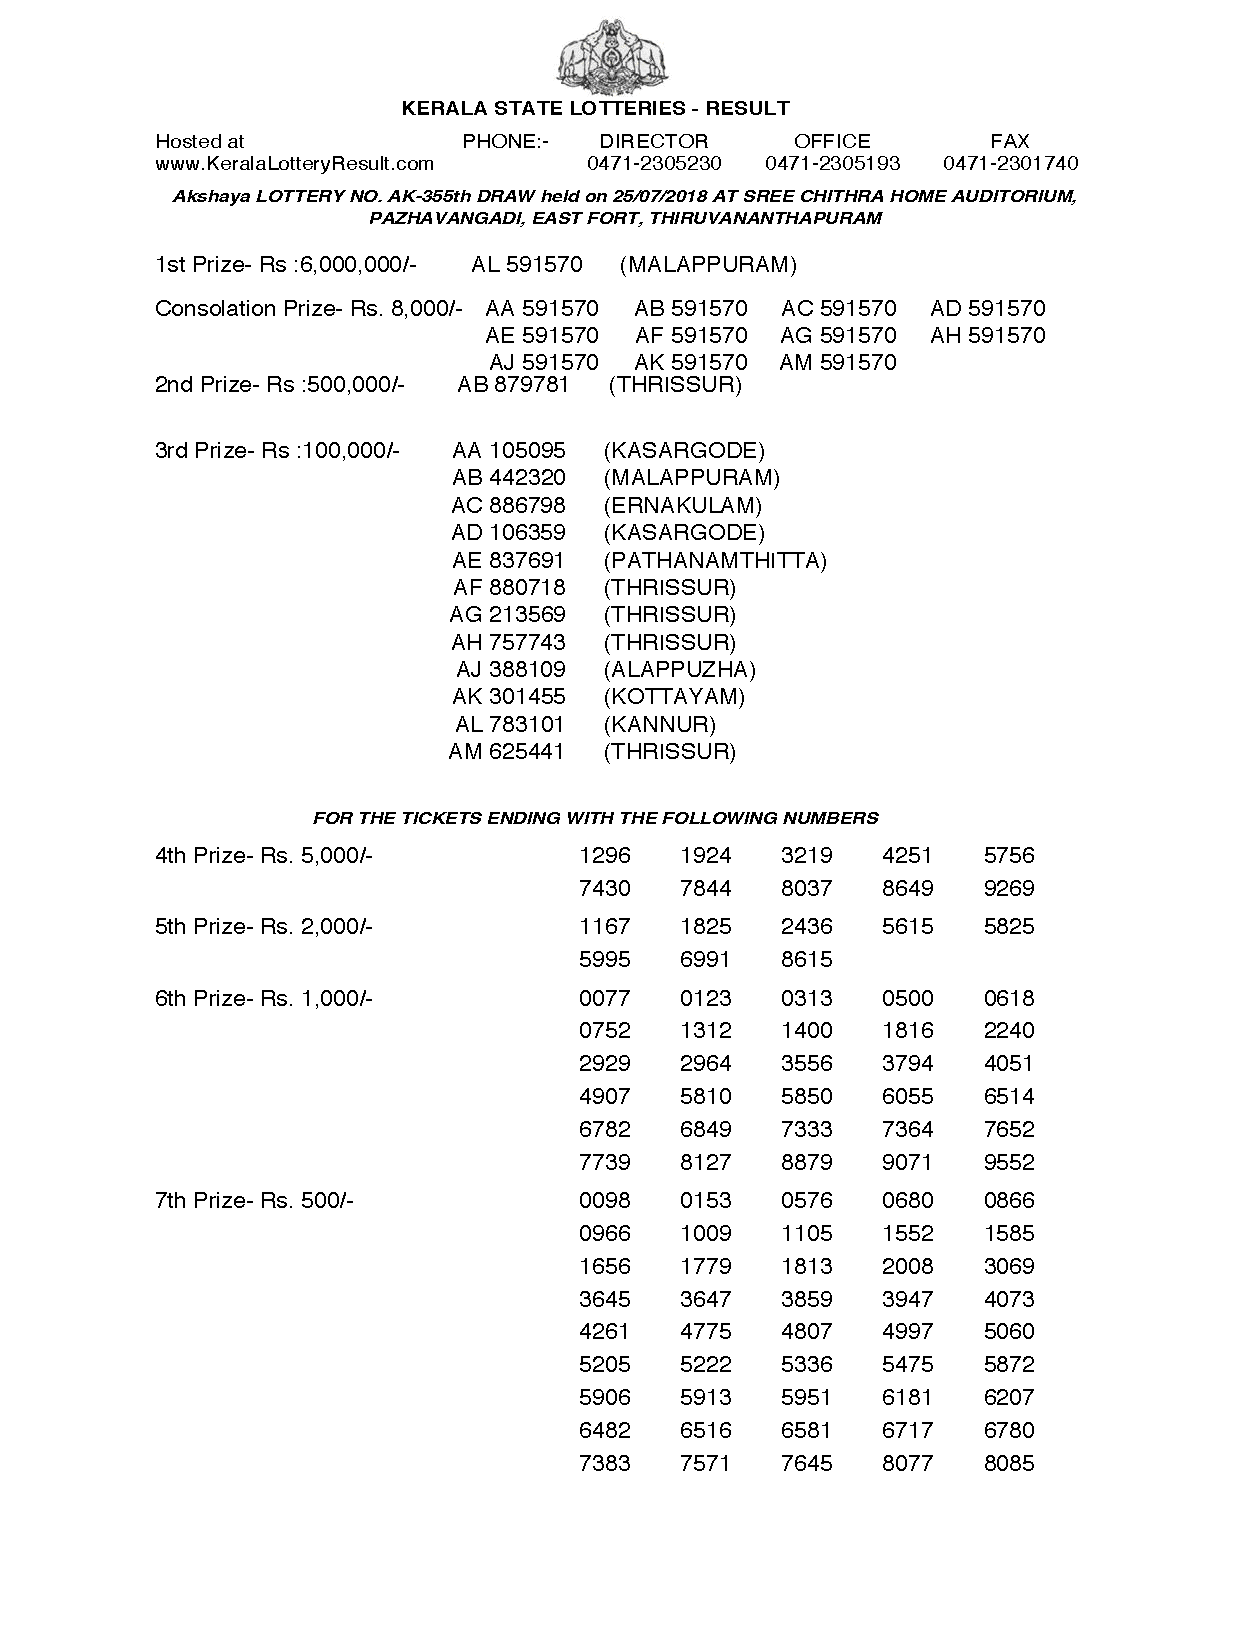 Akshaya AK355 Kerala Lottery Results Screenshot: Page 1